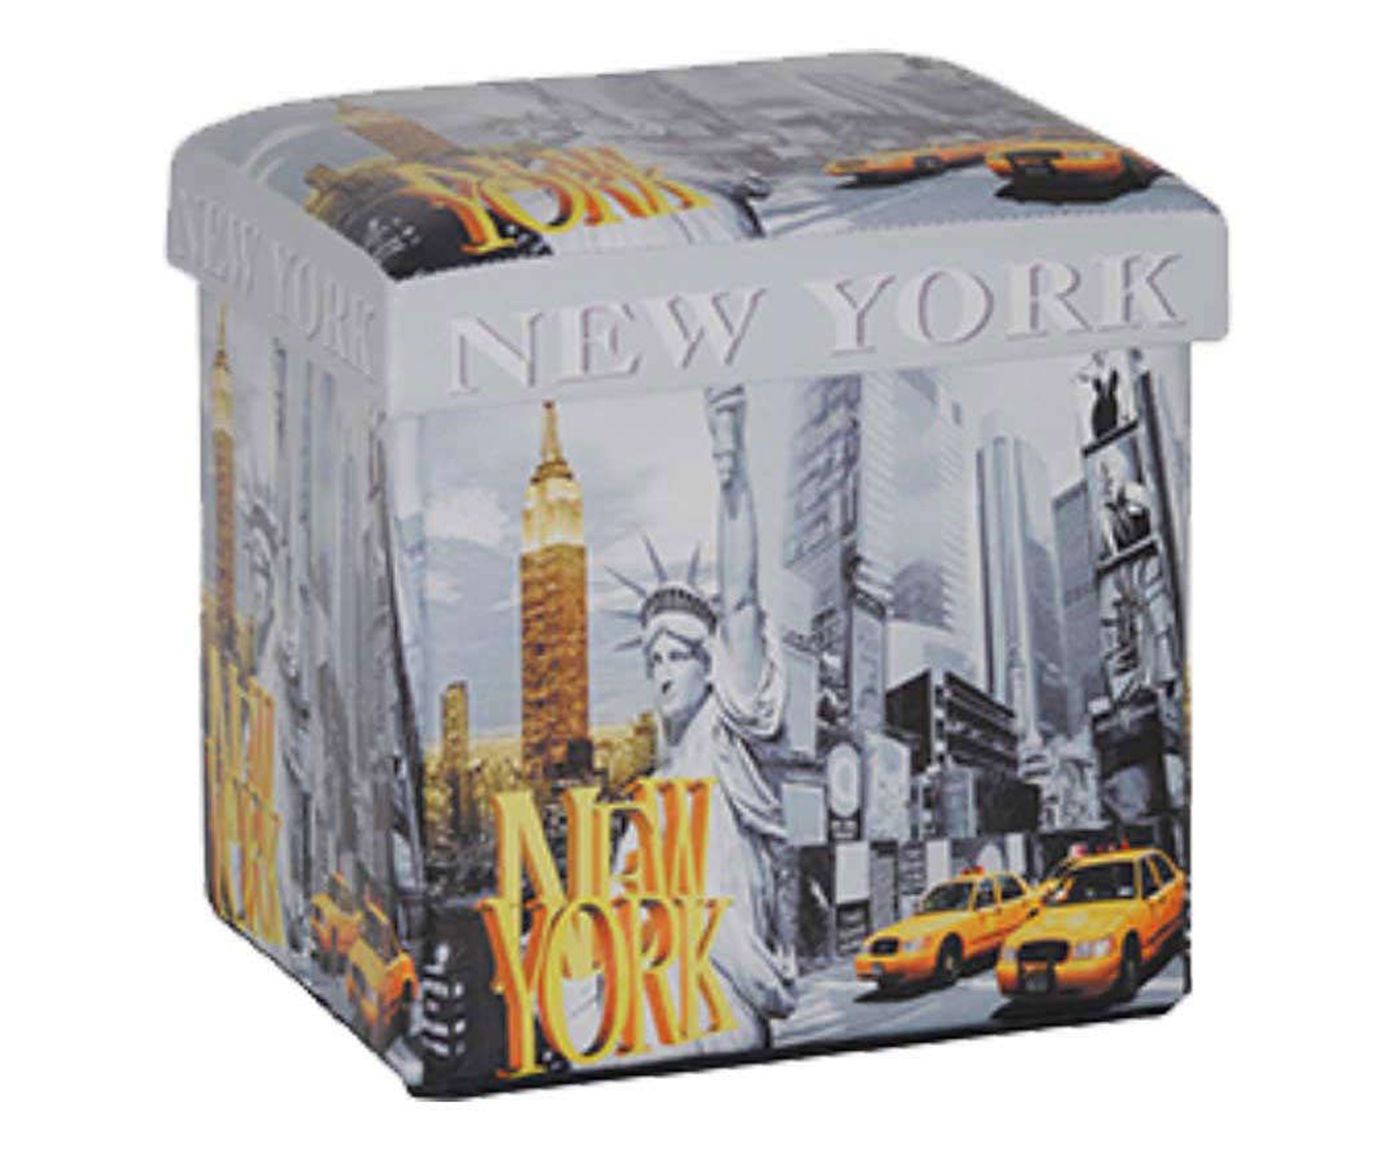 Pufe Box Nova York | Westwing.com.br